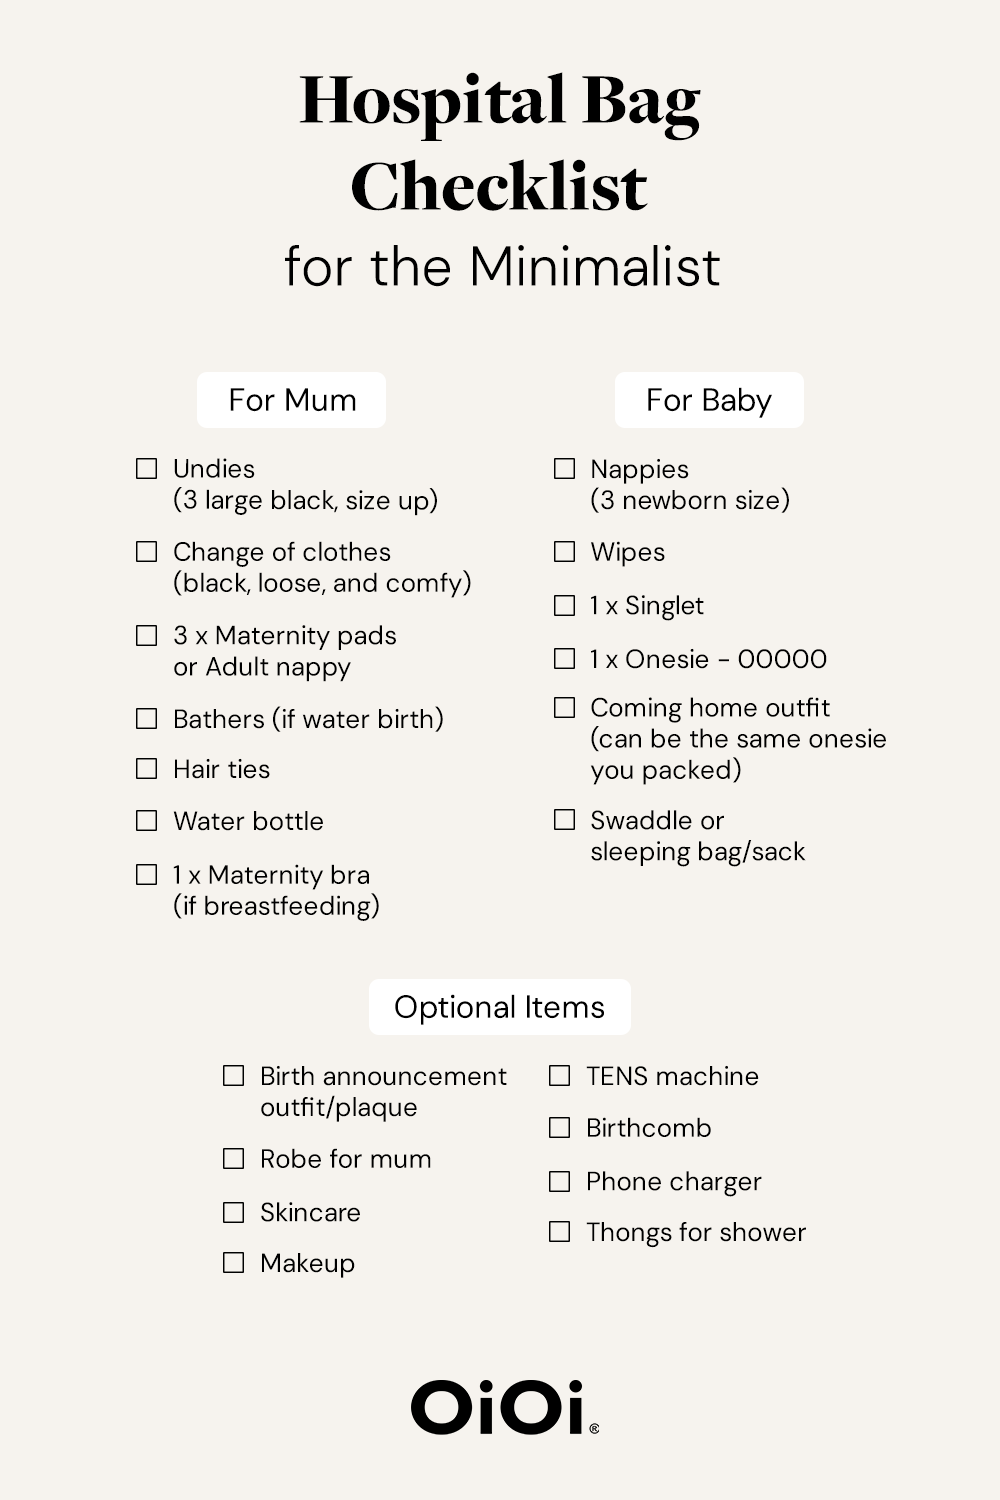 Minimalist Hospital Bag Checklist Australia